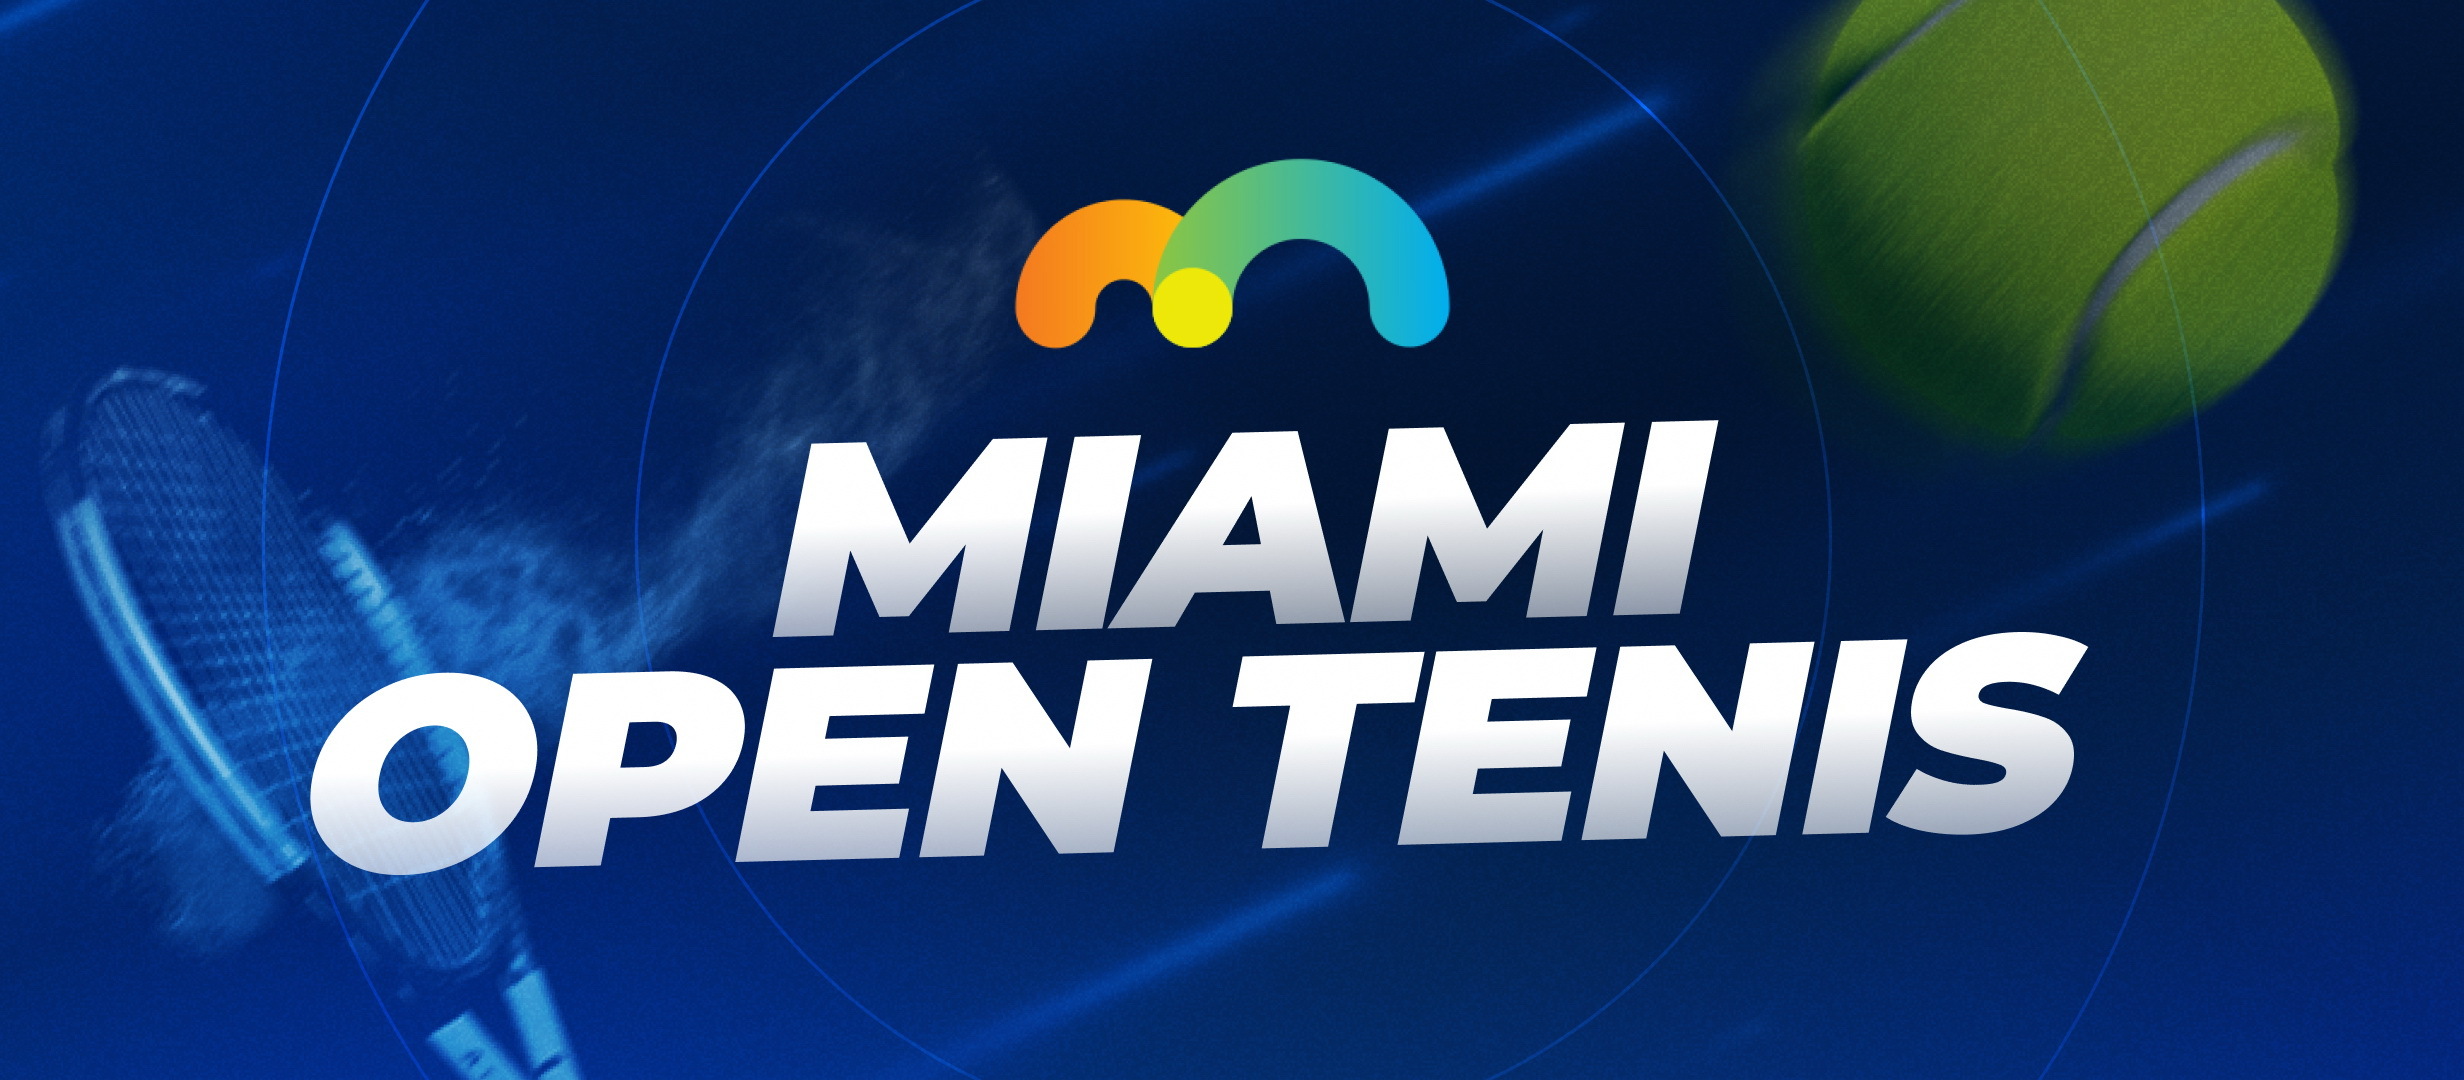 Sorana Cîrstea, Irina Begu și Ana Bogdan joacă la Miami Open